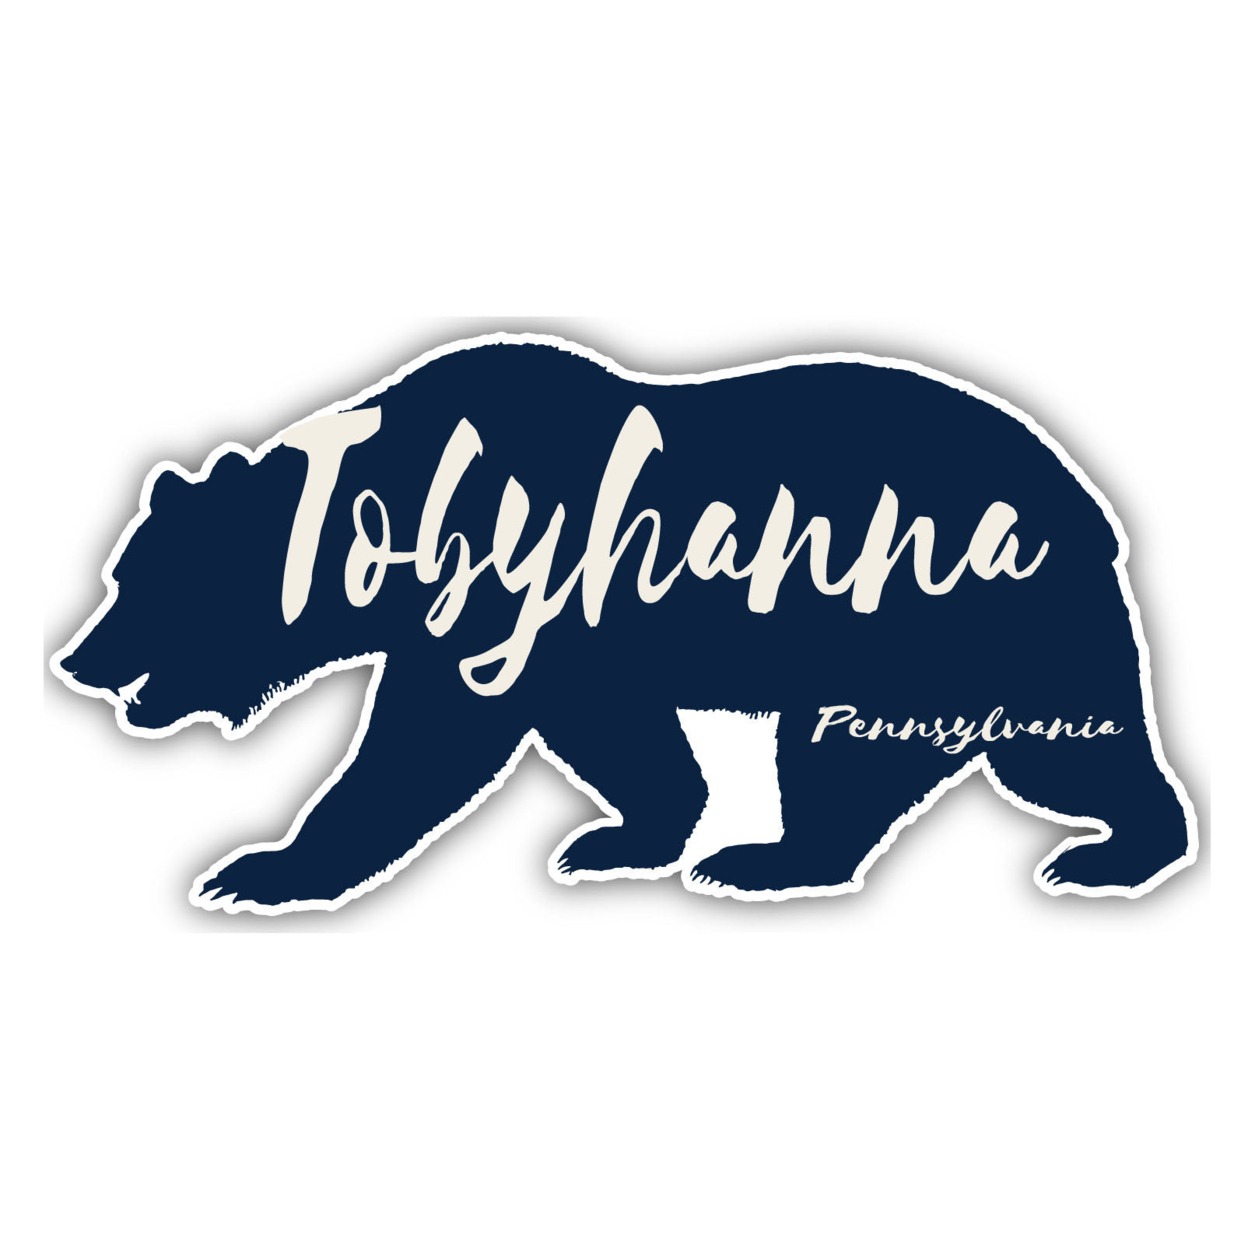 Tobyhanna Pennsylvania Souvenir Decorative Stickers (Choose Theme And Size) - Single Unit, 4-Inch, Bear